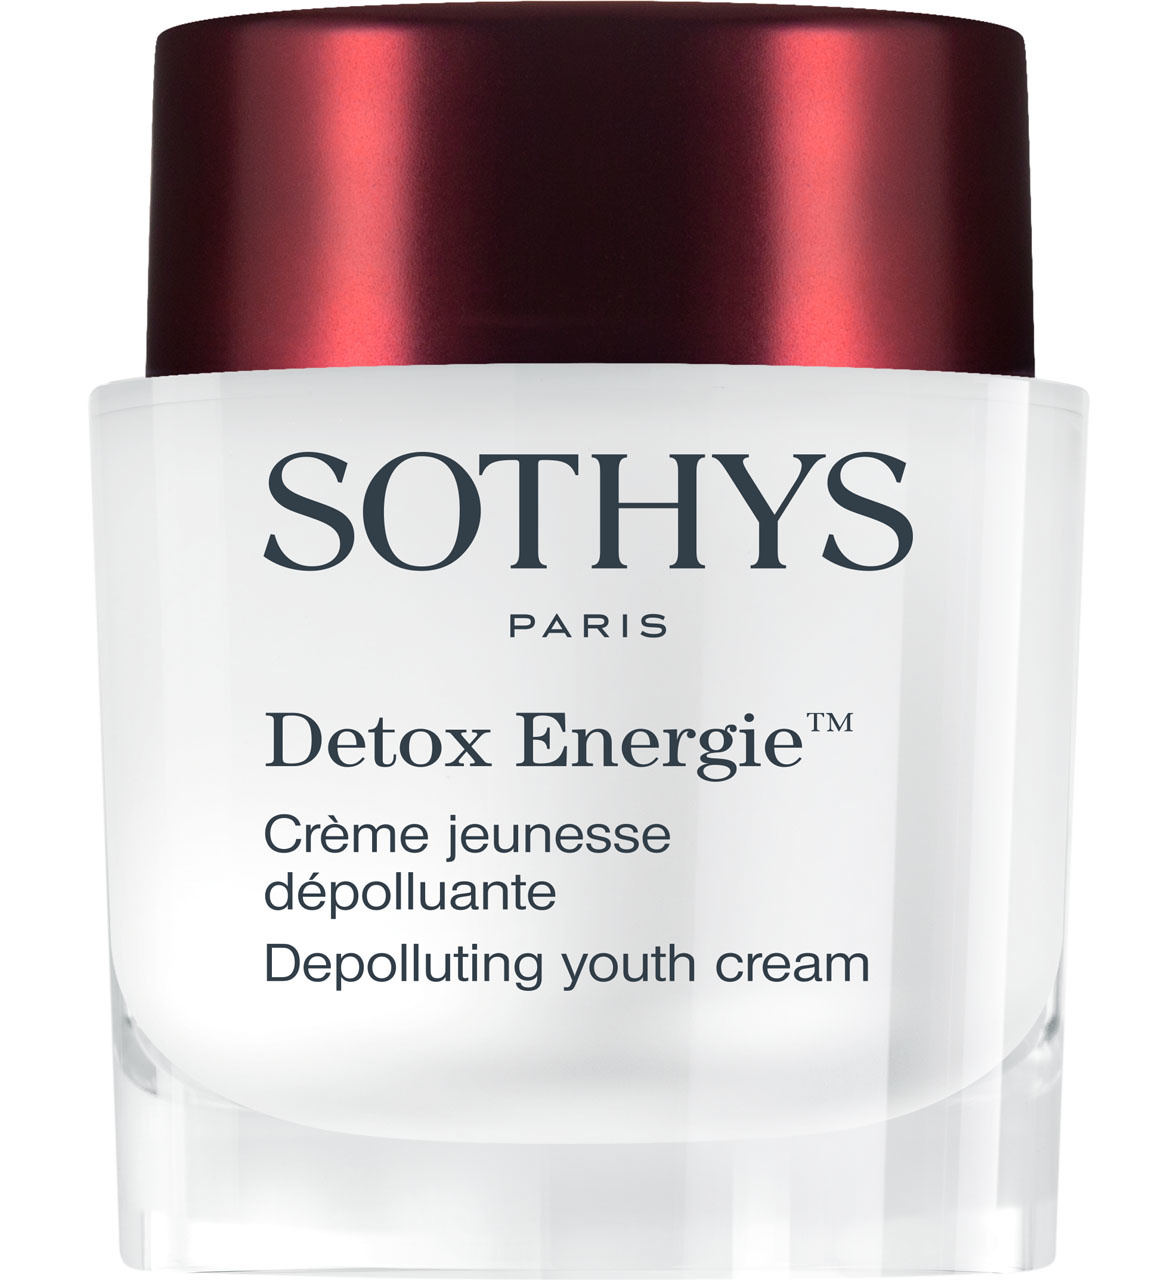 Sothys Sothys Detox Energie, dépolution youth cream, Crème jeunesse gegen umweltbelastungen